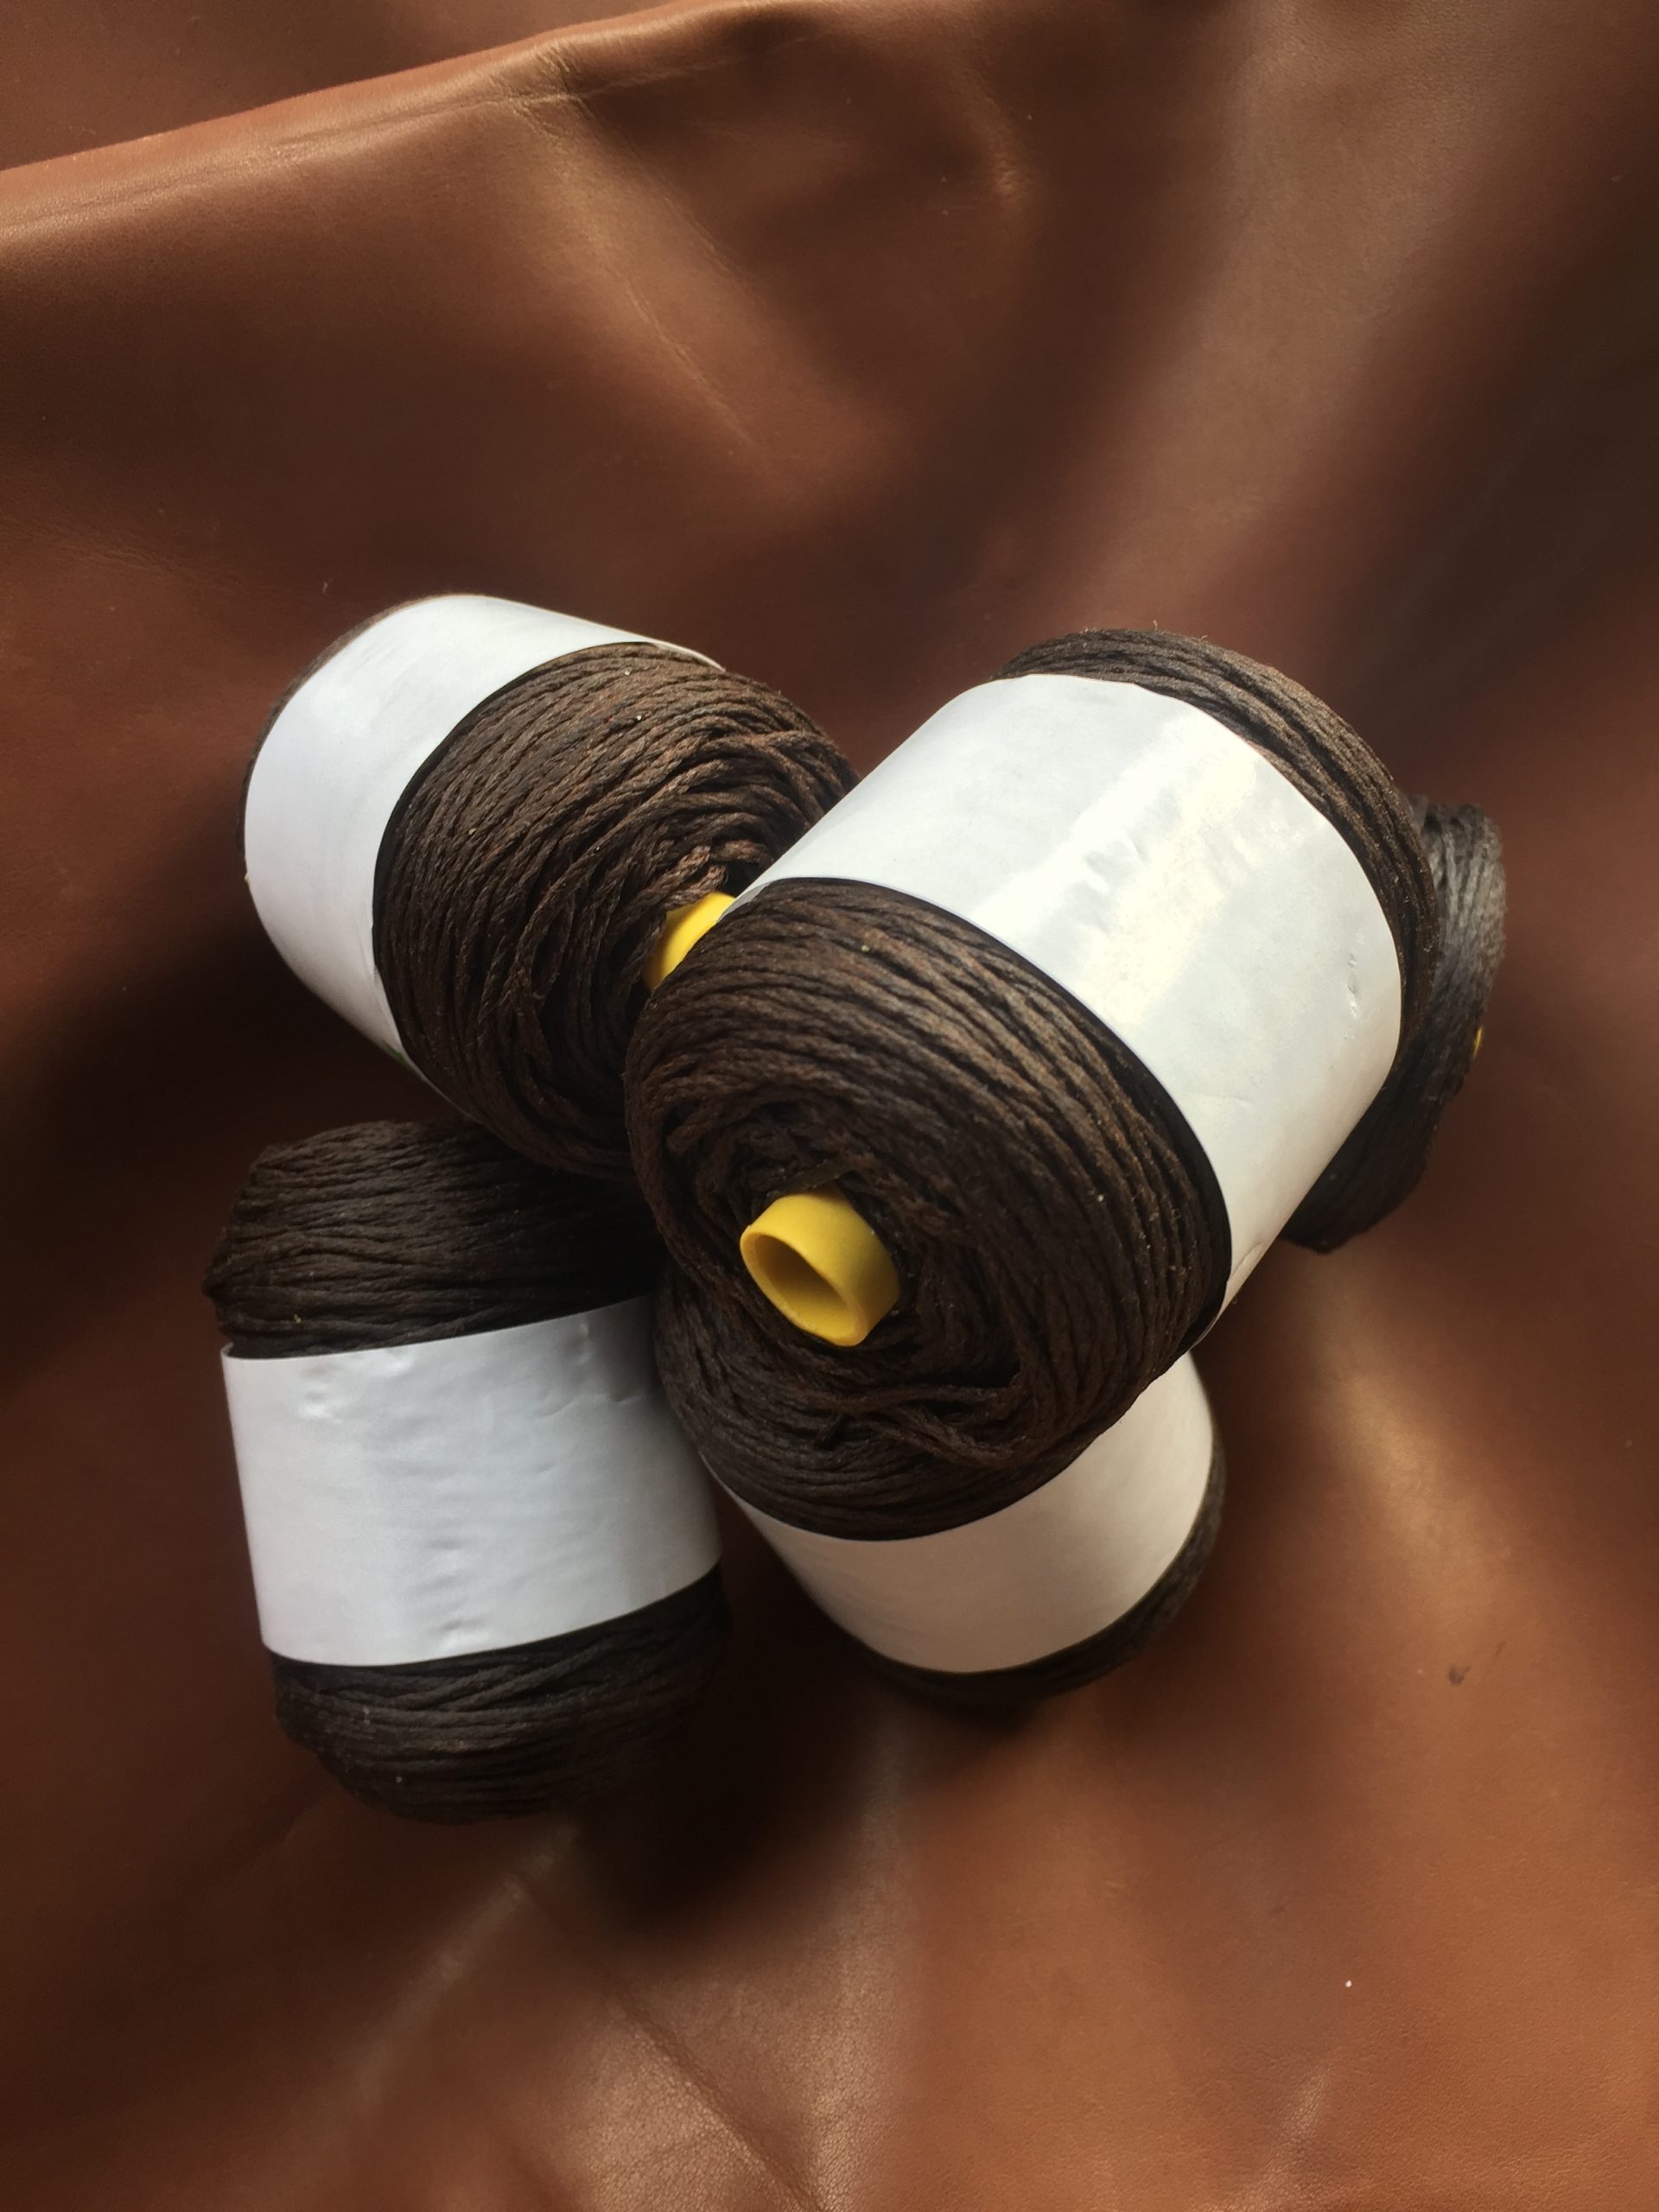 Waxed thread Dark Brown 100 m - Leather & Canvas